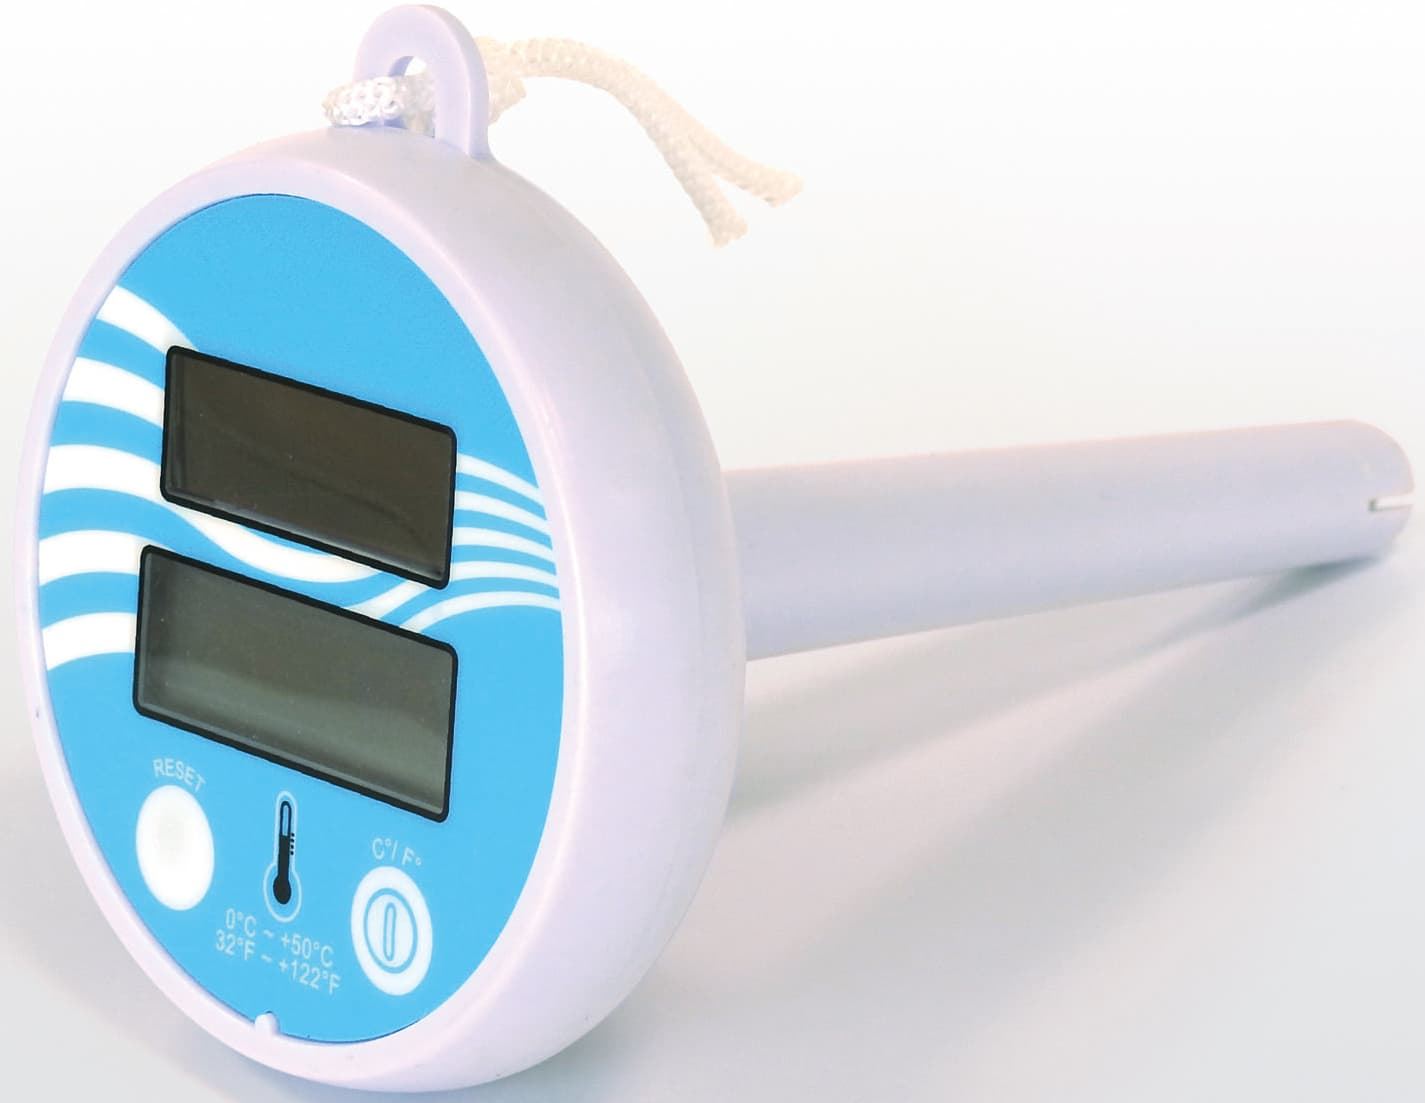 BSI-Digitale-Solar-Zwembadthermometer